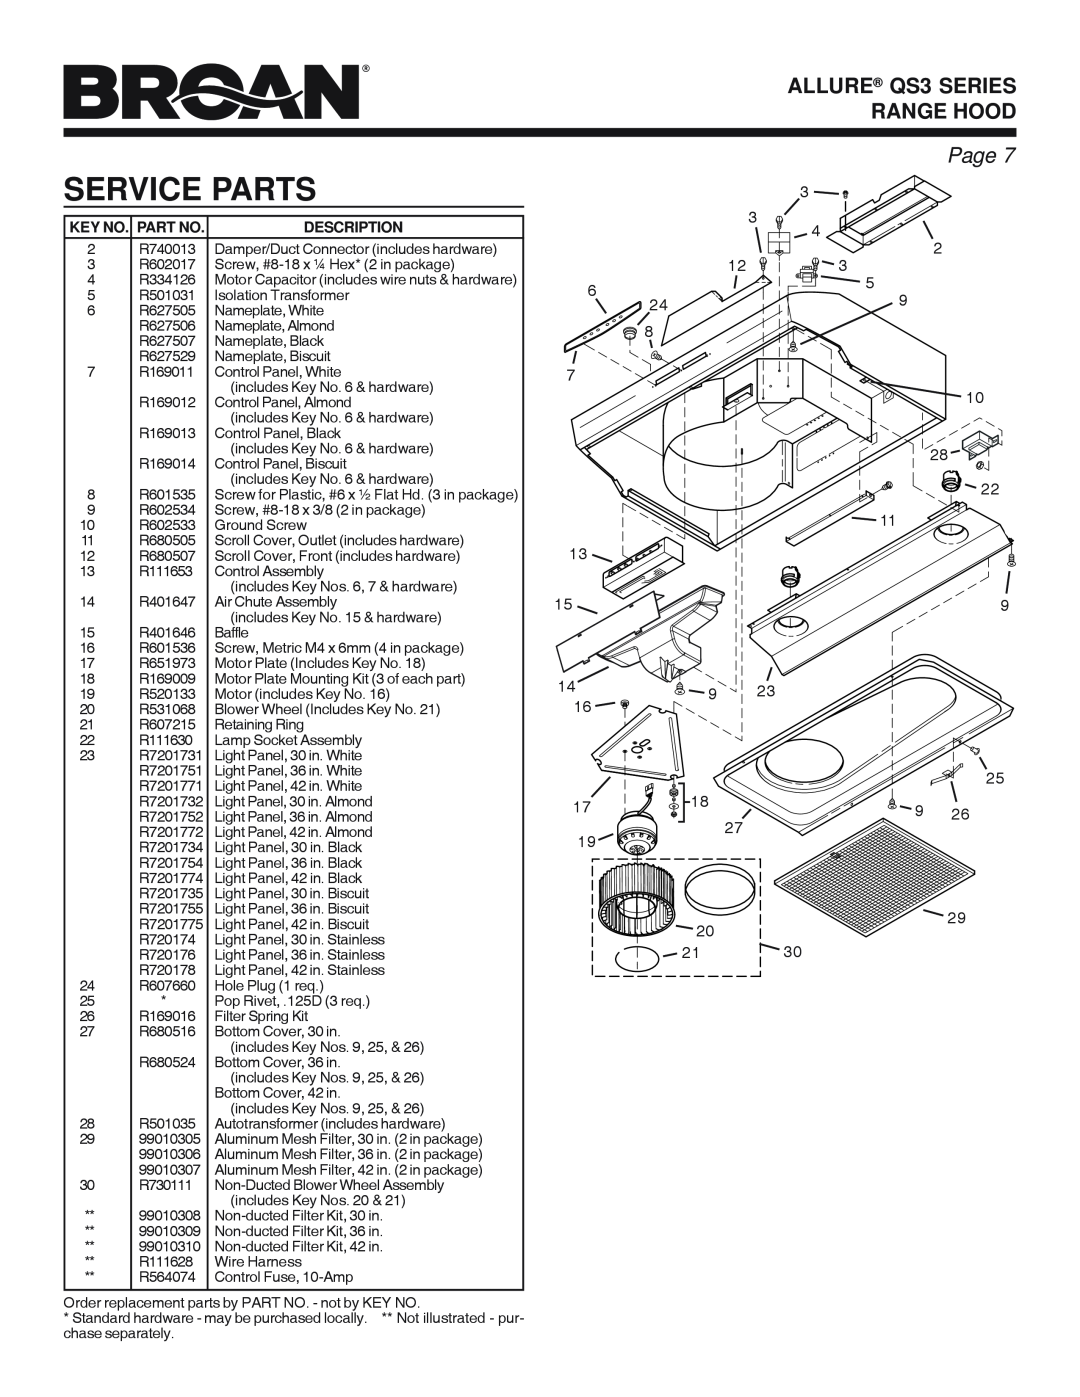 Broan manual Service Parts, ALLURE QS3 SERIES RANGE HOOD, Page, Key No. Part No, Description 